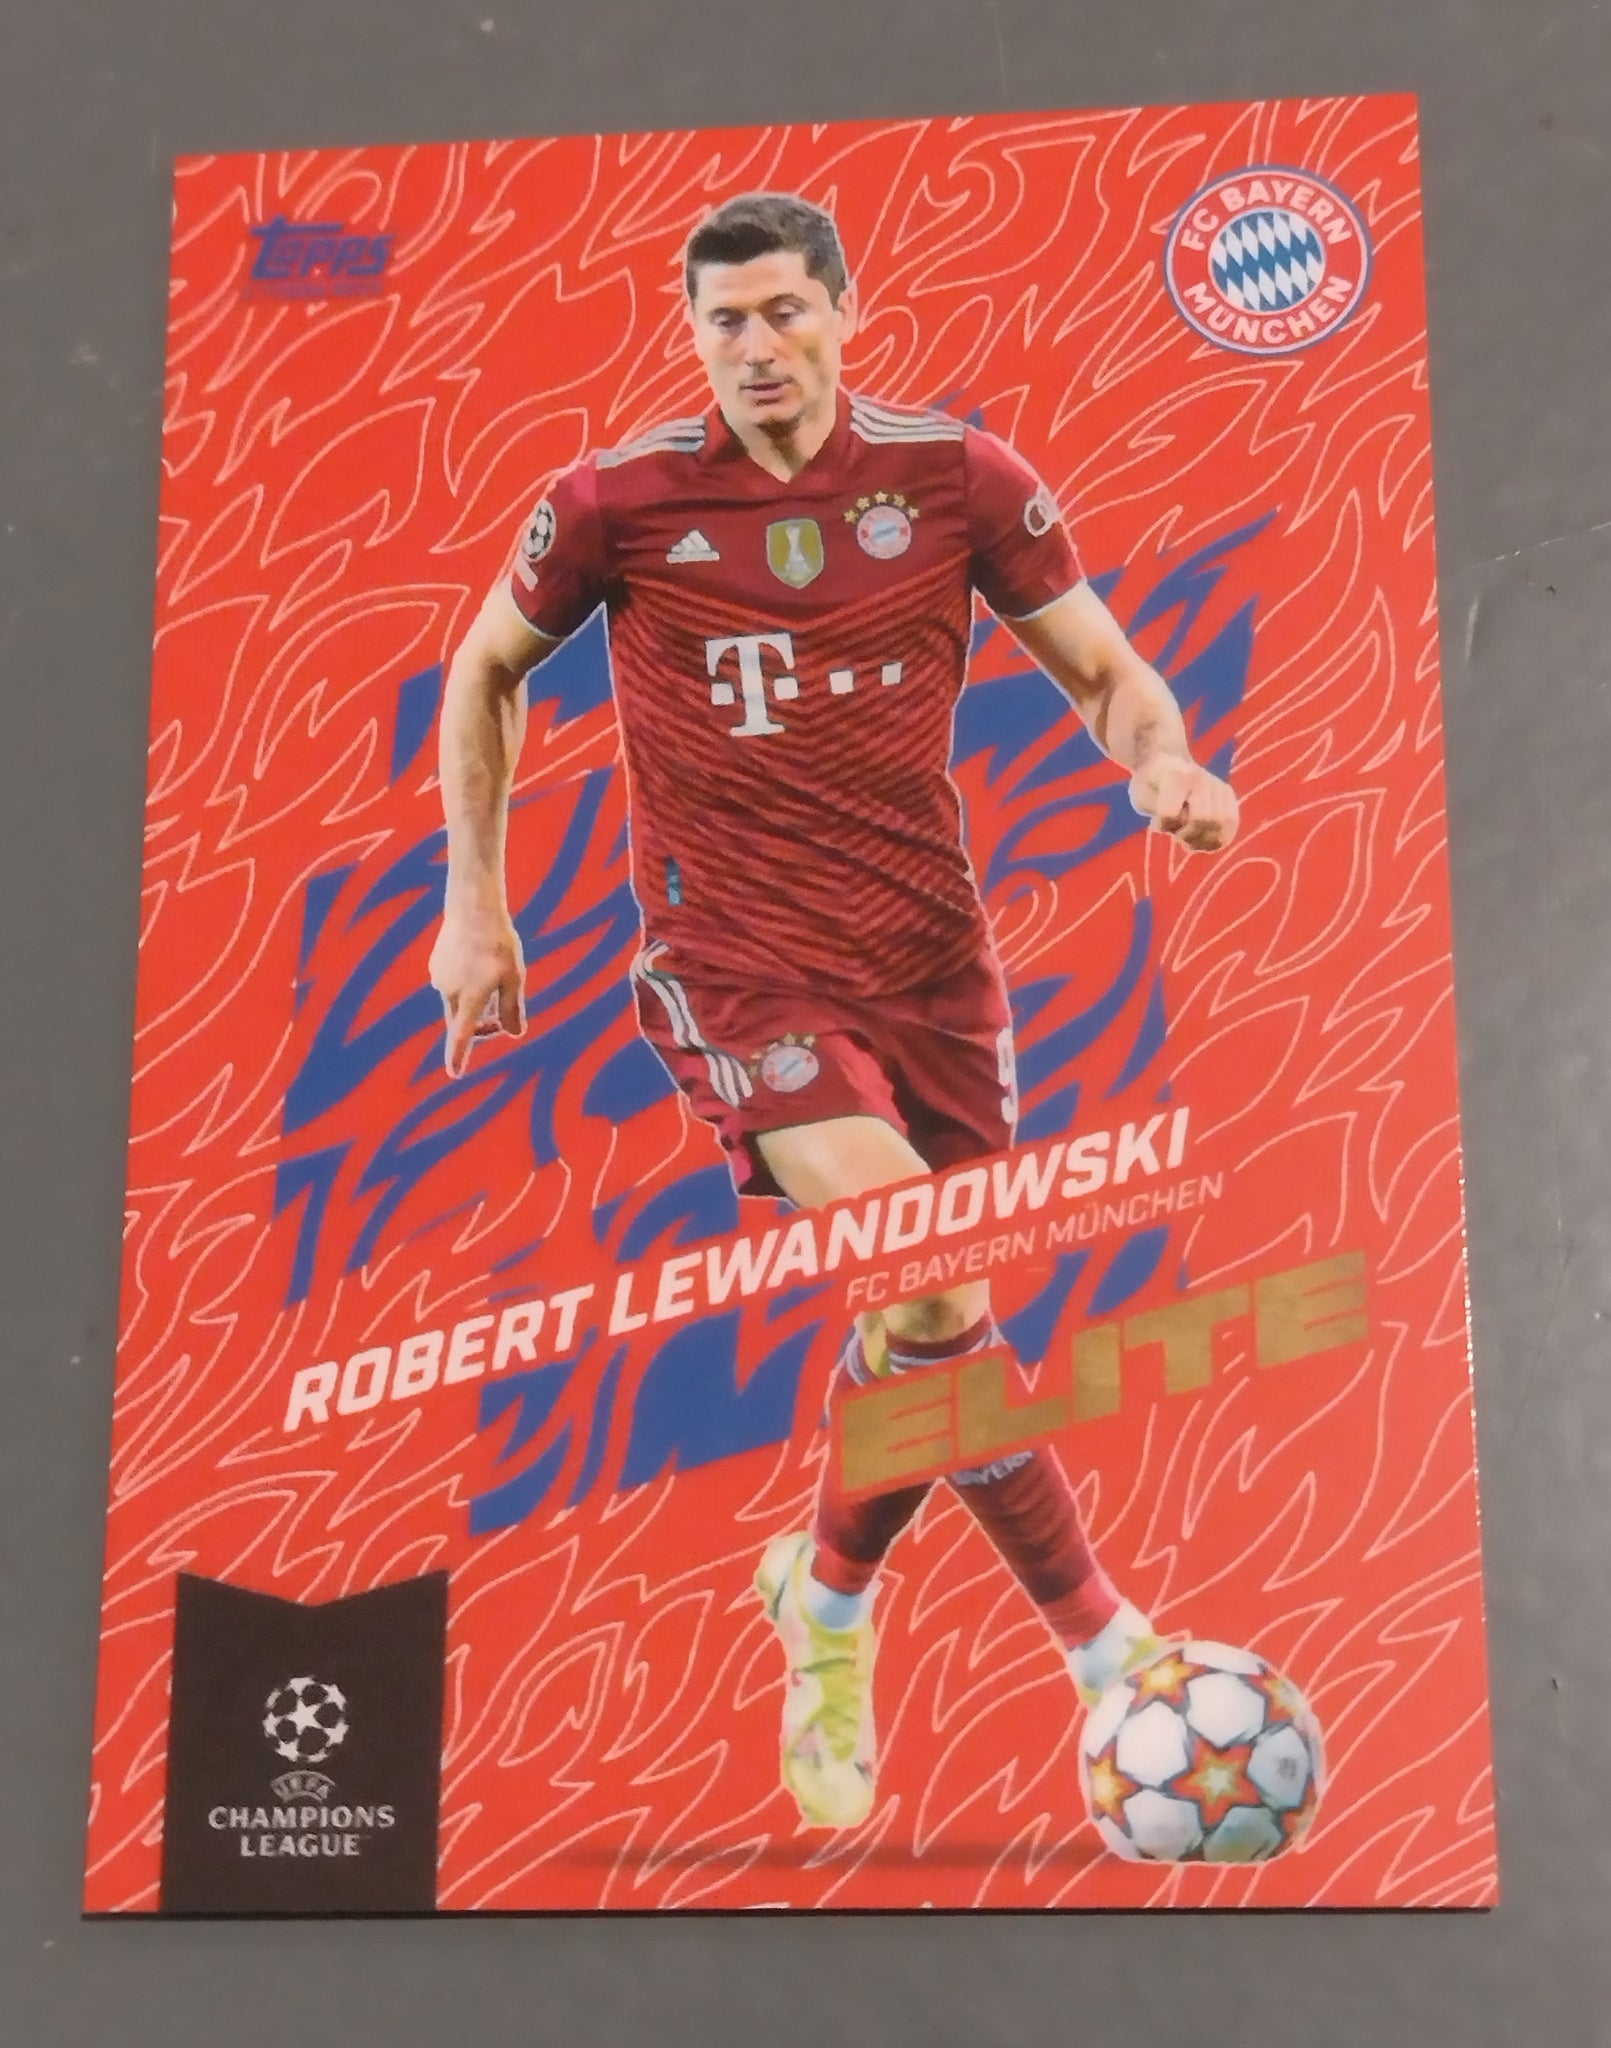 2021 Topps UEFA Champions League Gold Robert Lewandowski Elite Trading Card